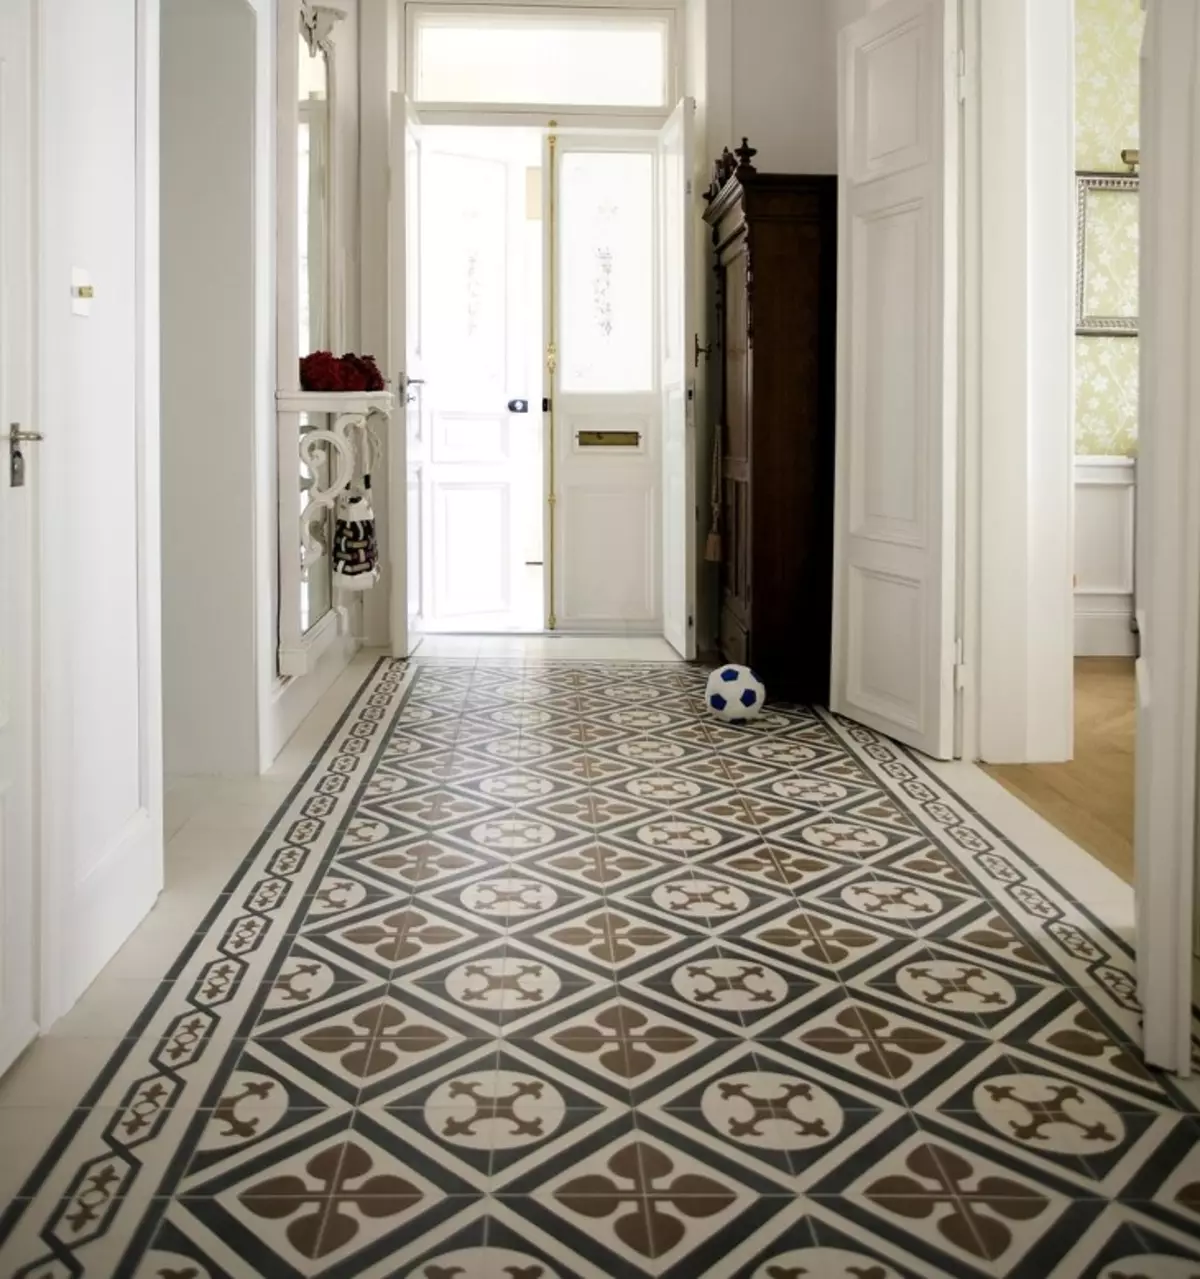 Pločice na podu u hodniku (99 fotografija): Opcije za dizajn poda u hodniku. Obrasci izrađeni od porculanskih kamenih softvera, pločica i drugih prekrasnih opcija 9181_21